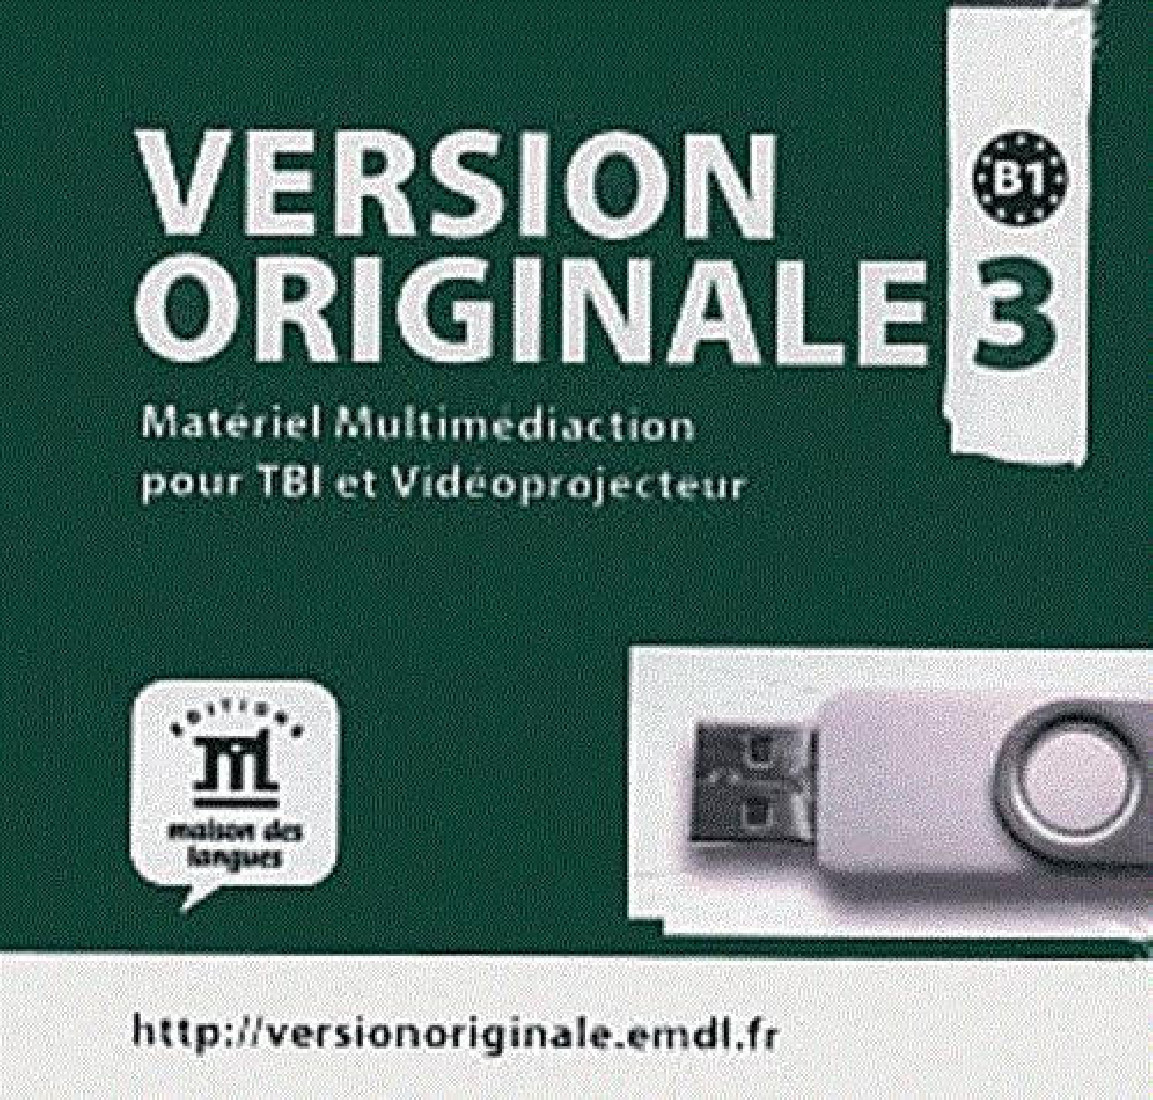 VERSION ORIGINALE 3 USB MULTIMEDIACTION